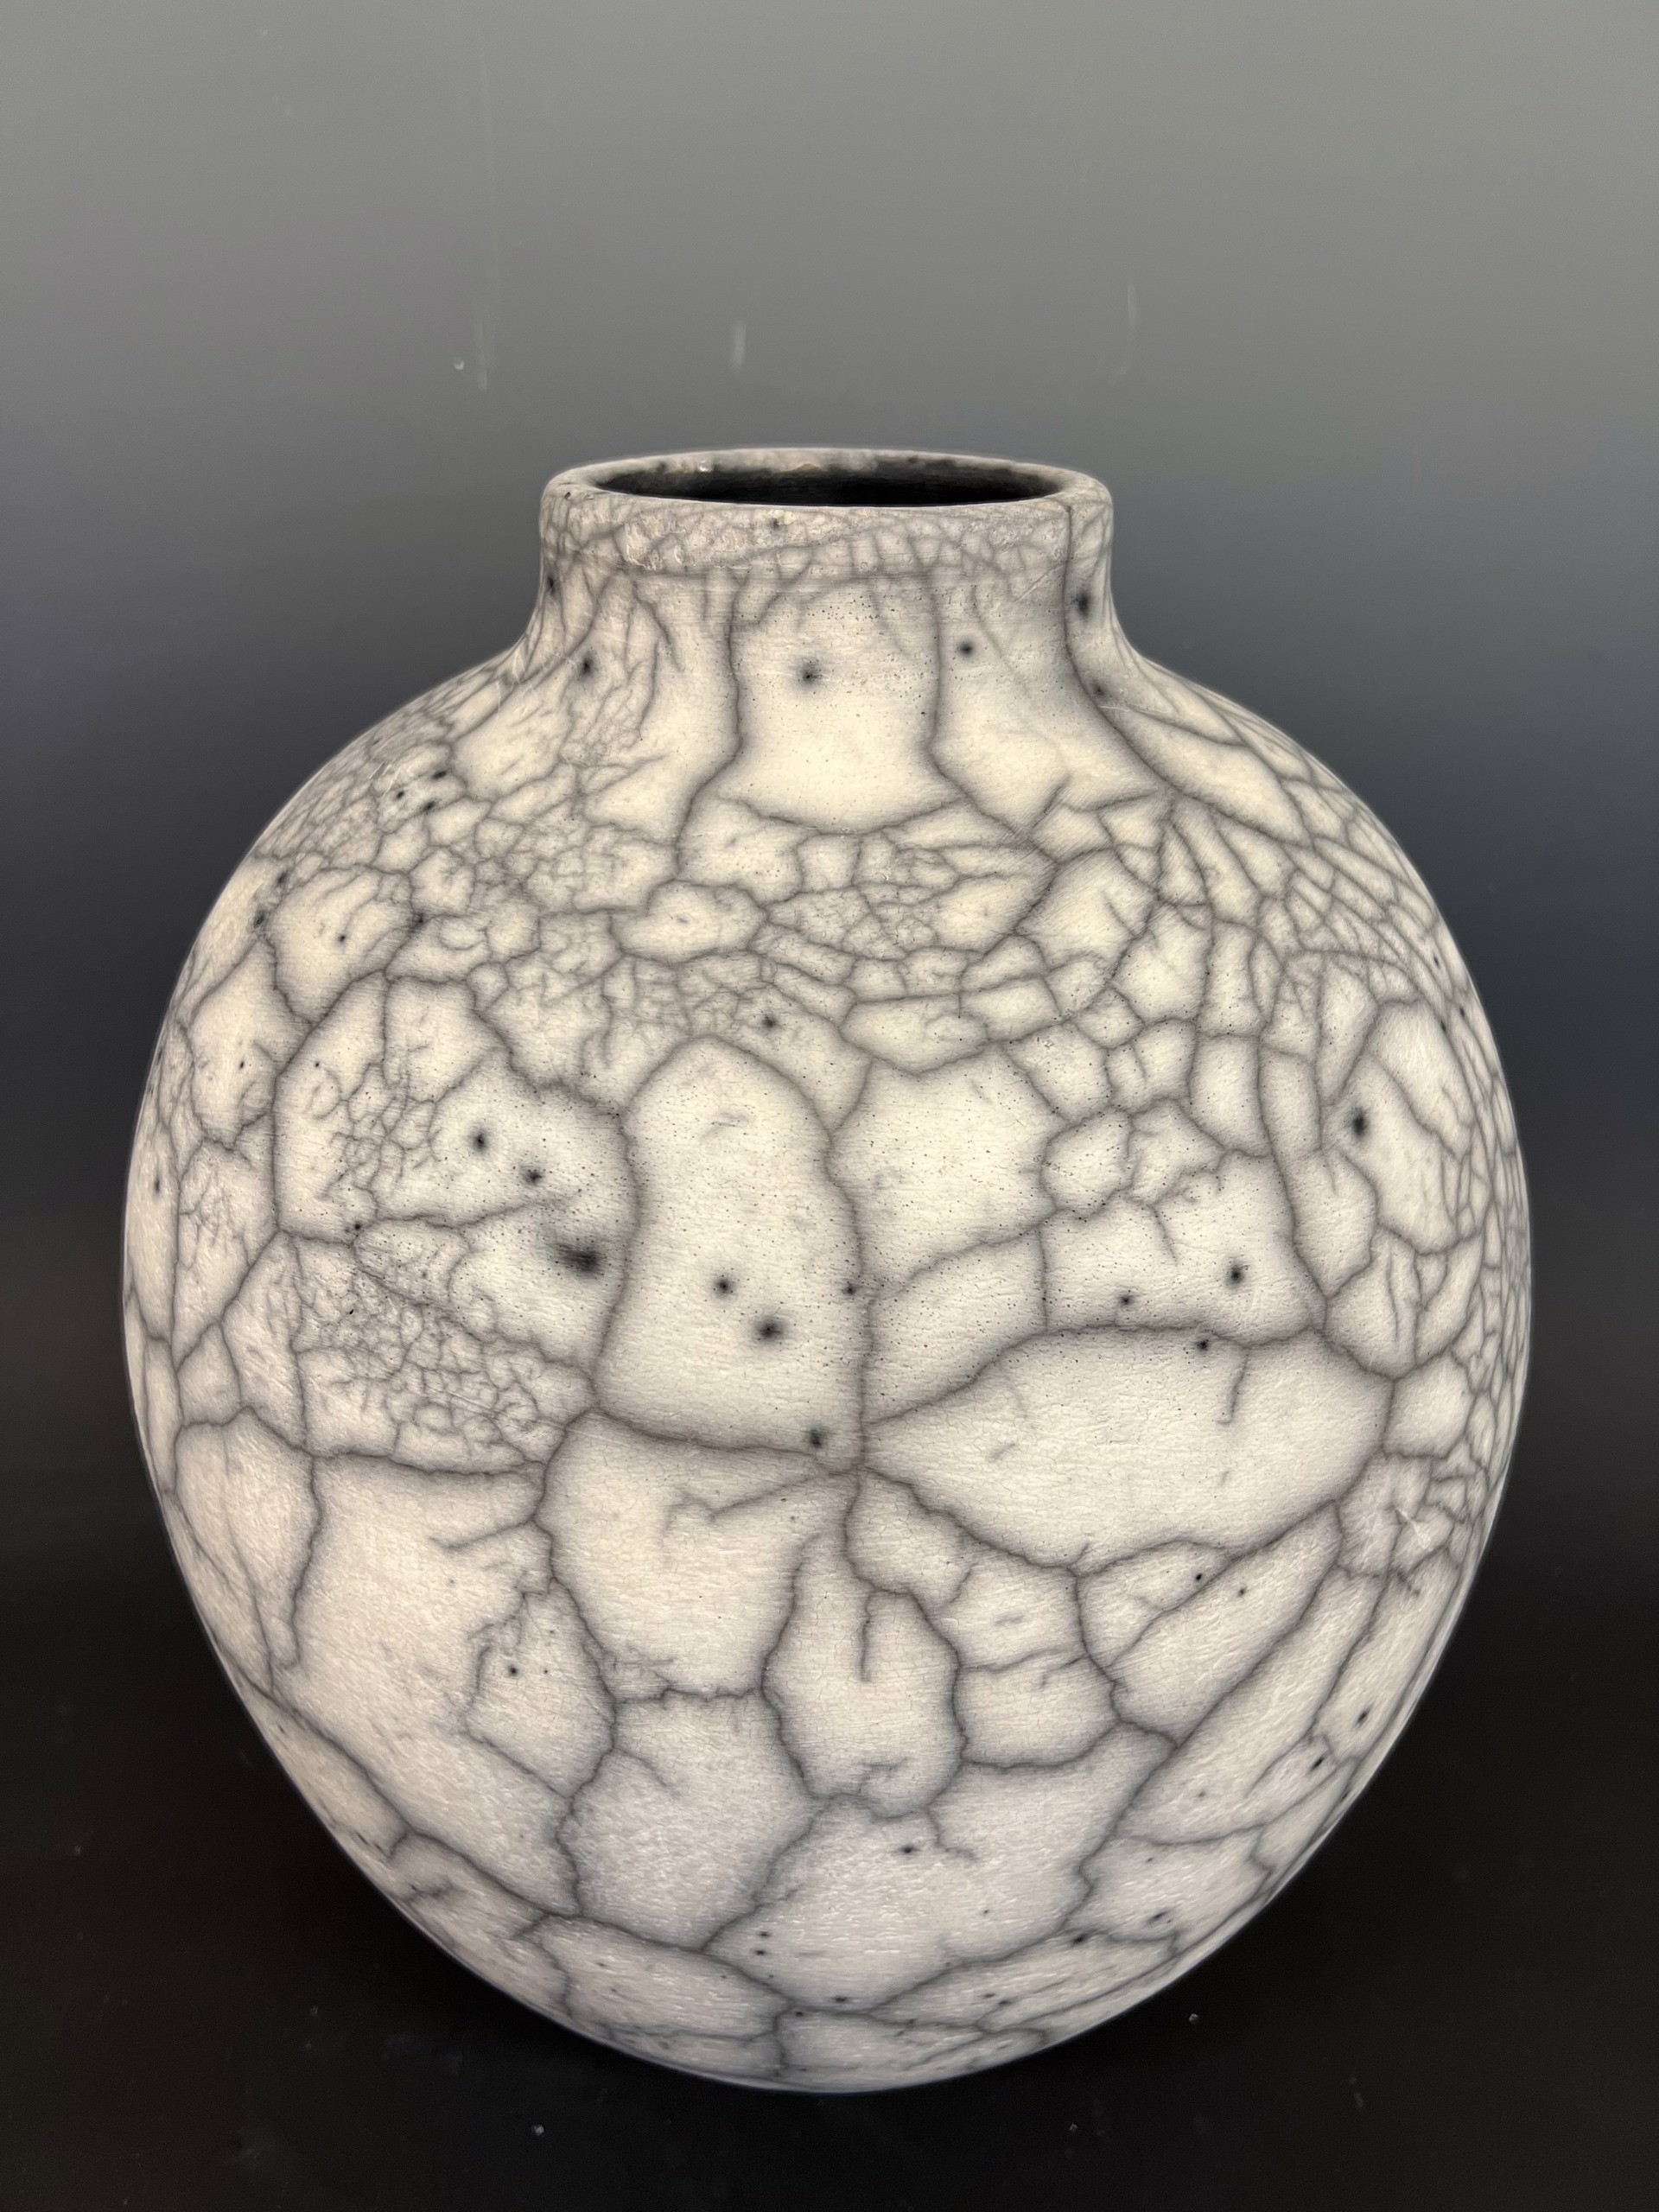 Tall Vase 2 by Jeffrey Perkins